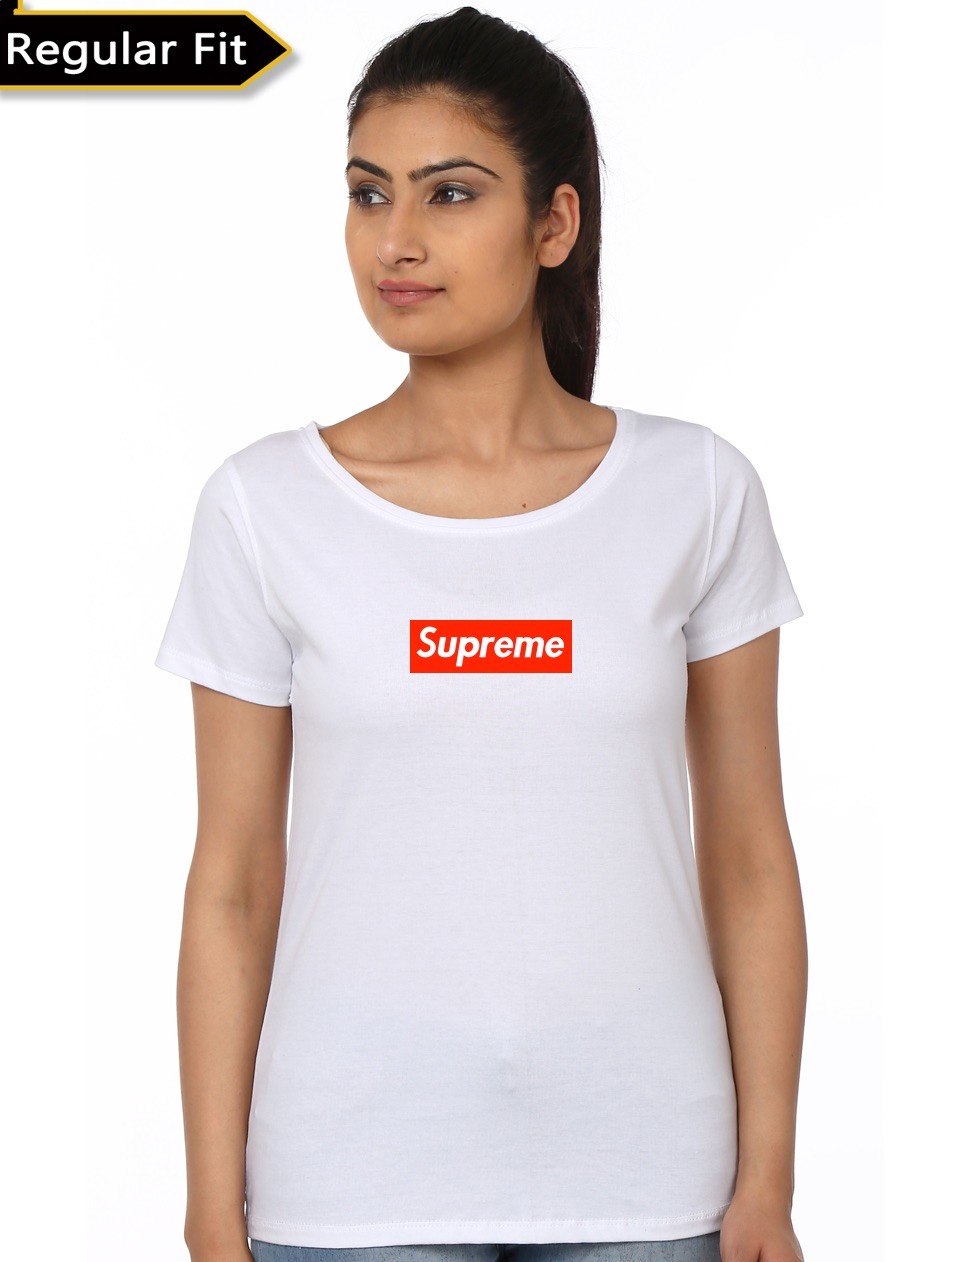 supreme T-shirt - スケートボード